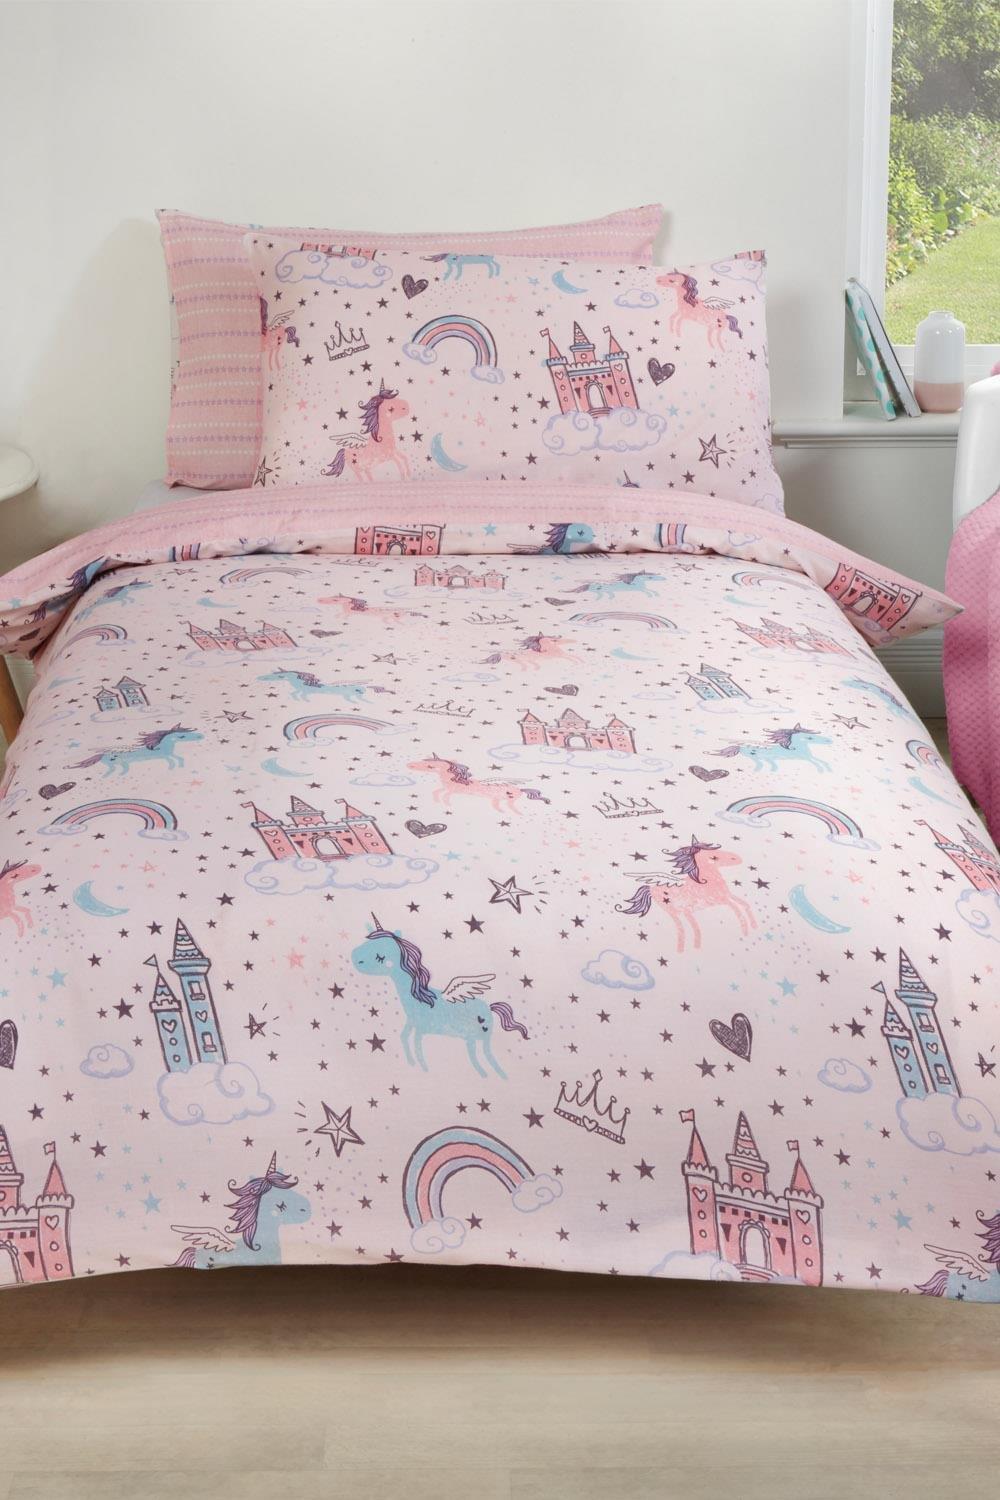 Dreamscene Unicorn Kingdom Duvet Cover with Pillowcase|Size: Cot Bed|light pink